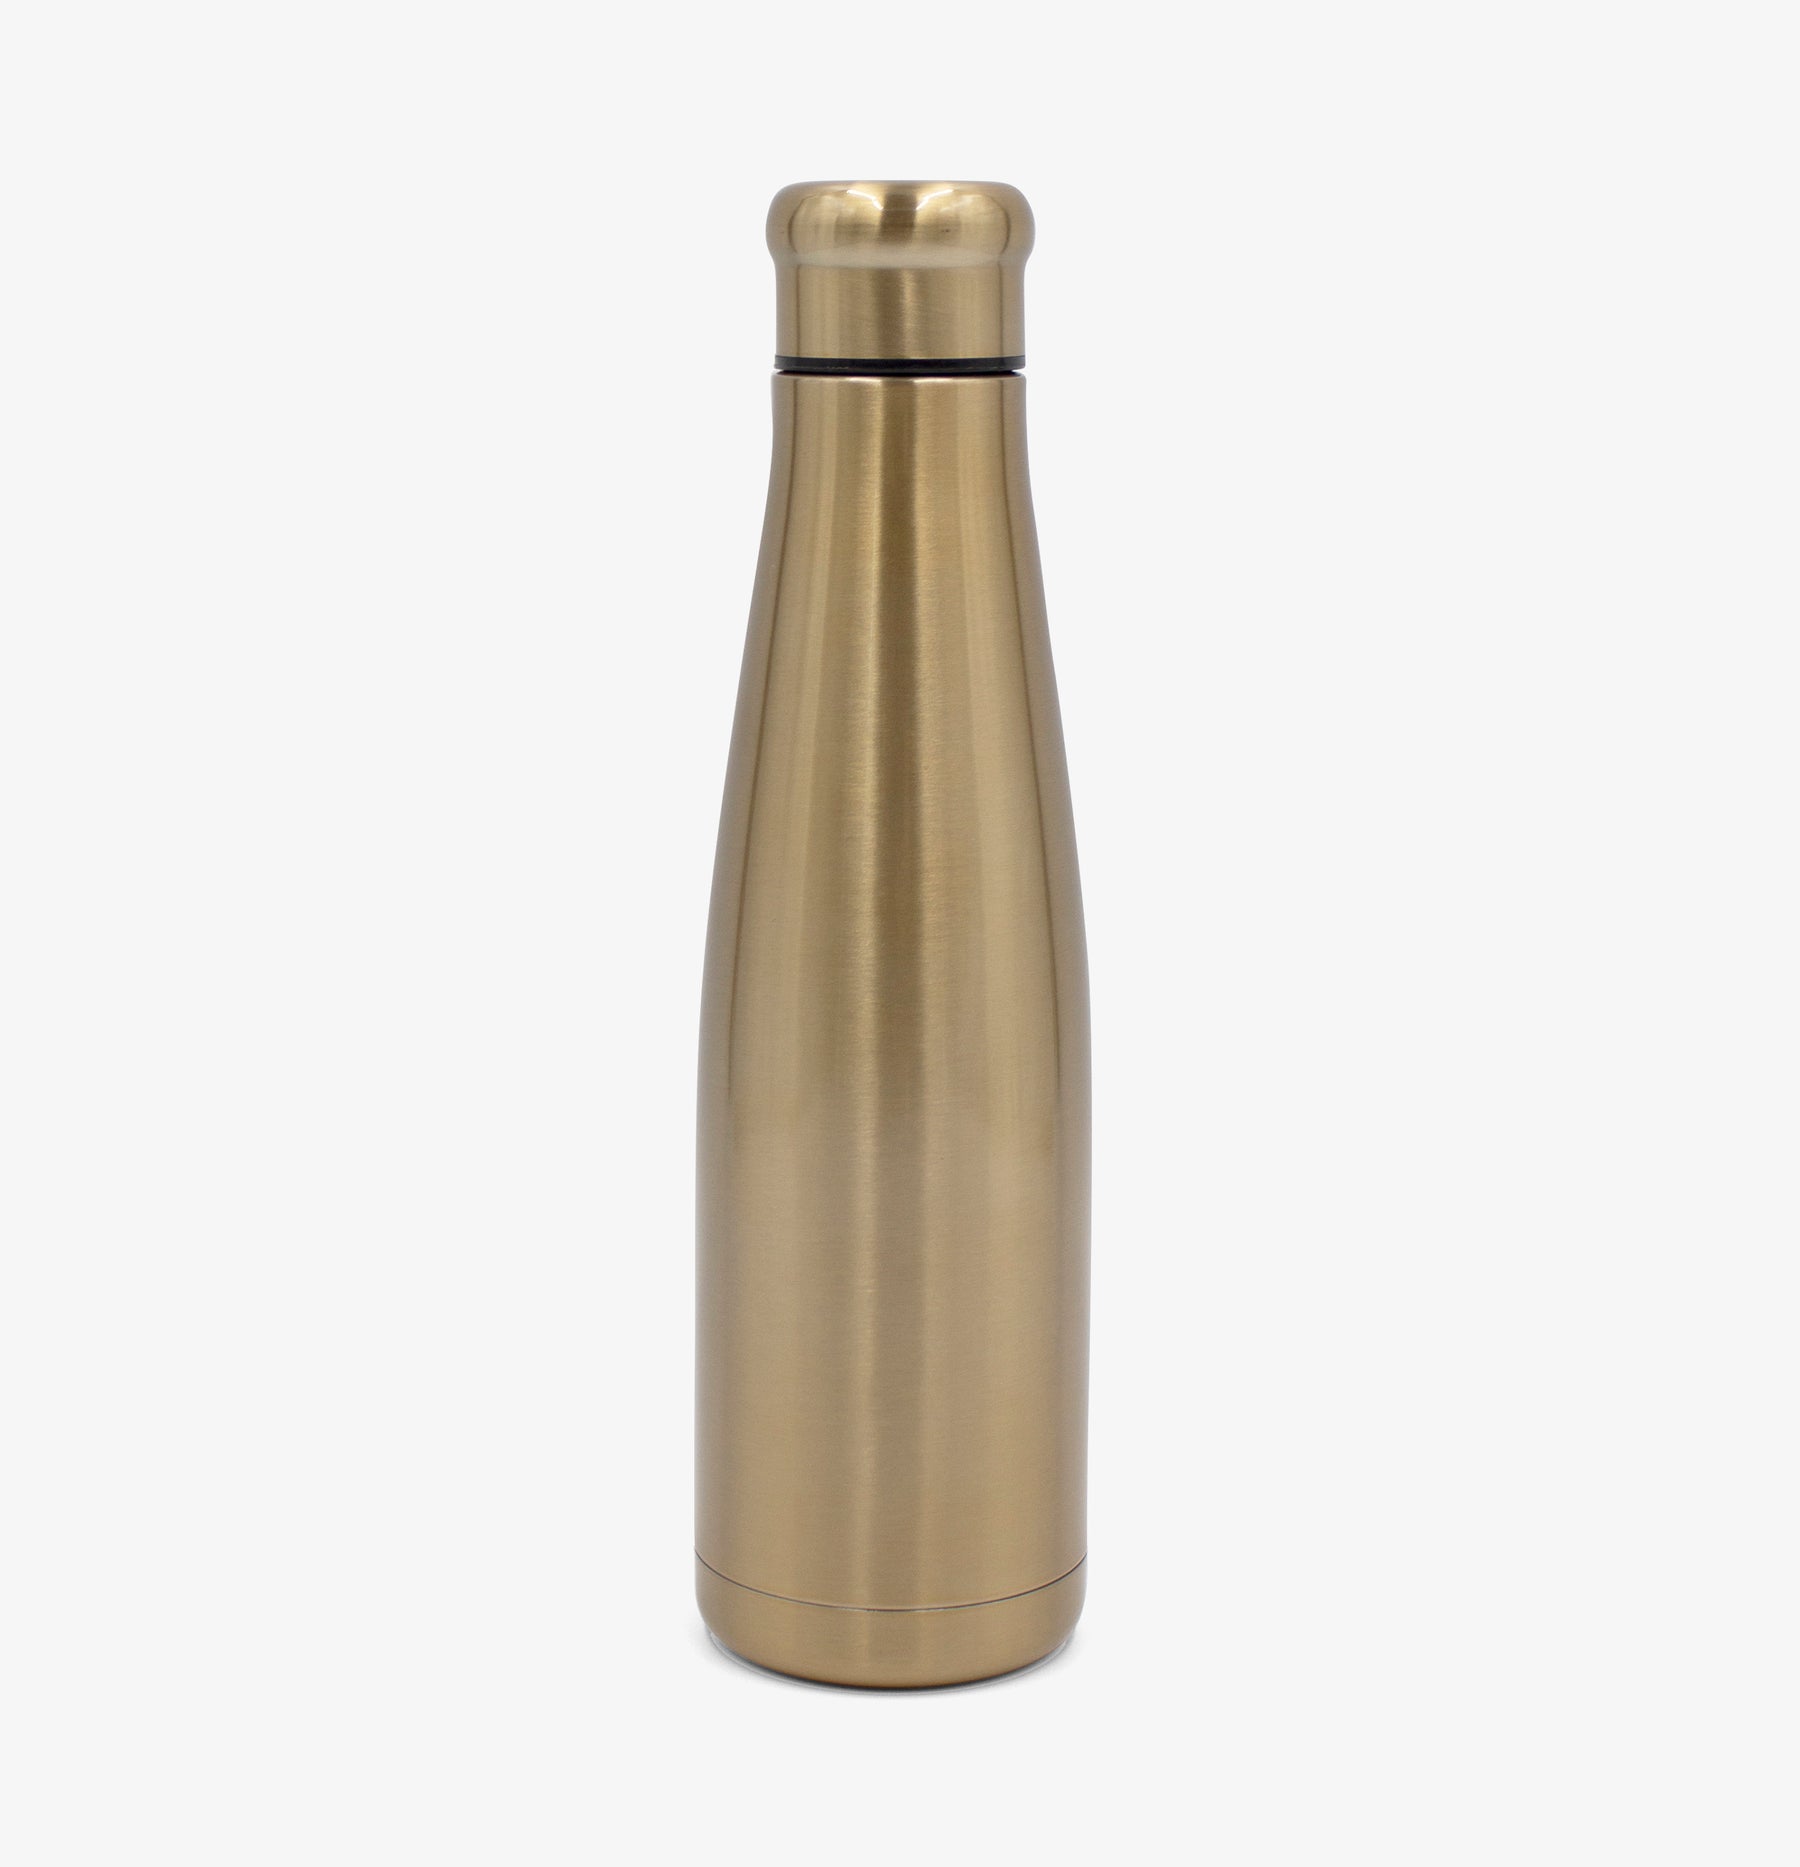 Stainless Steel Luna Bottle